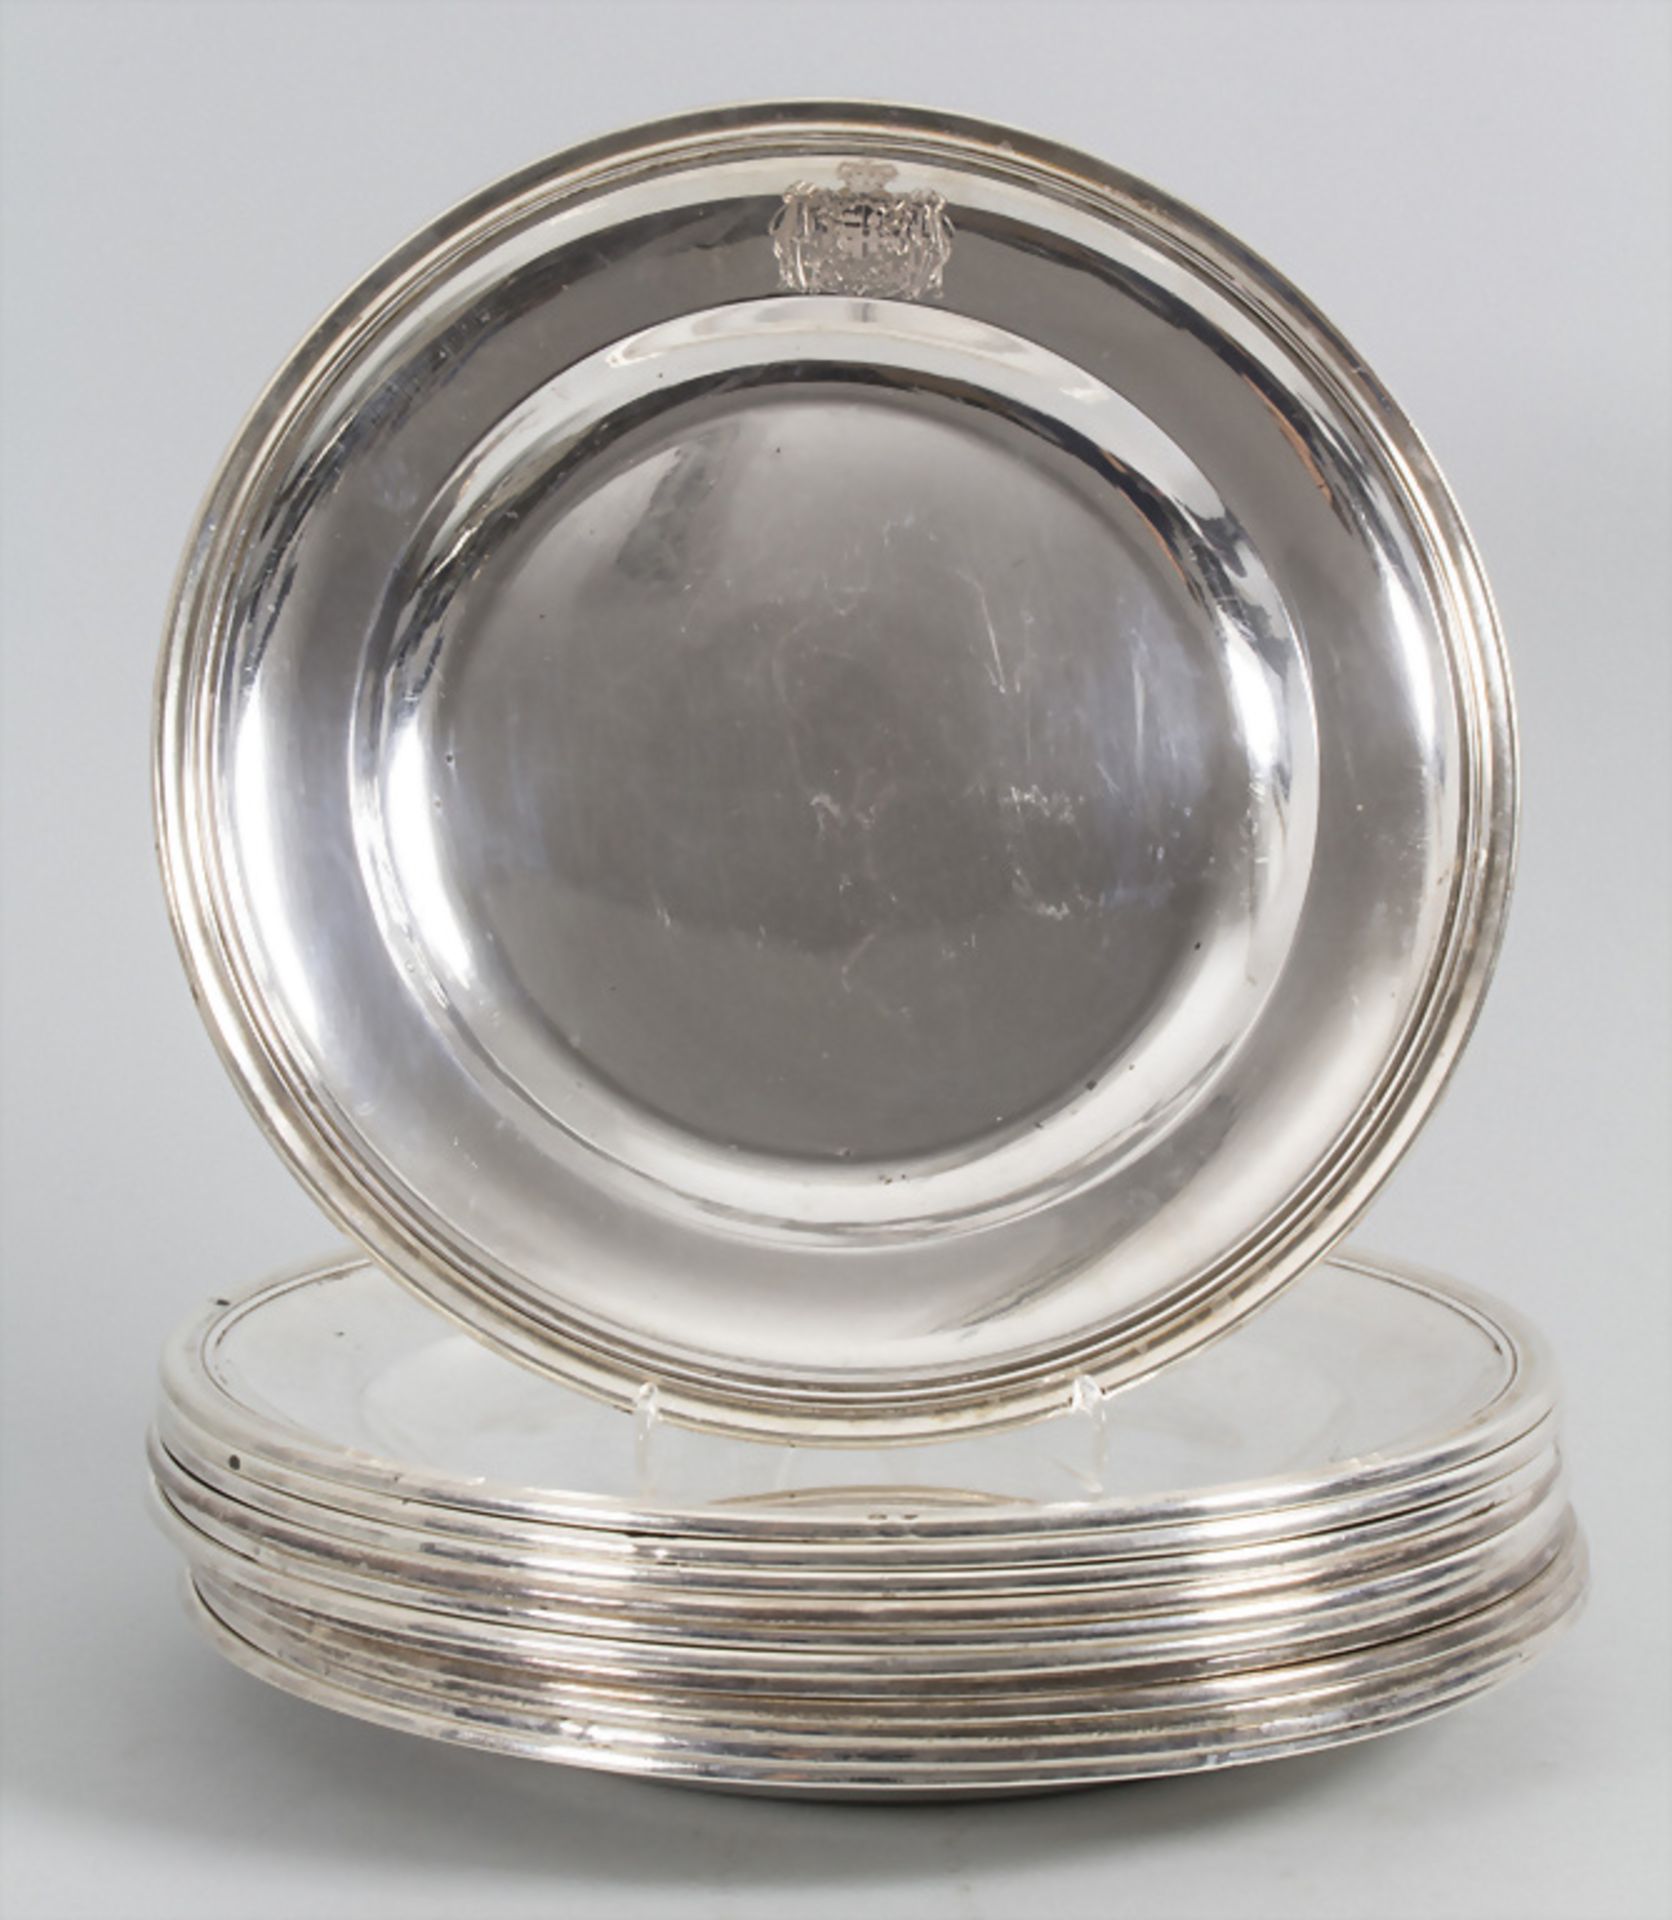 12 Silberteller / 12 assiettes en argent massif / A set of 12 silver plates, Odiot, Paris, um 1870